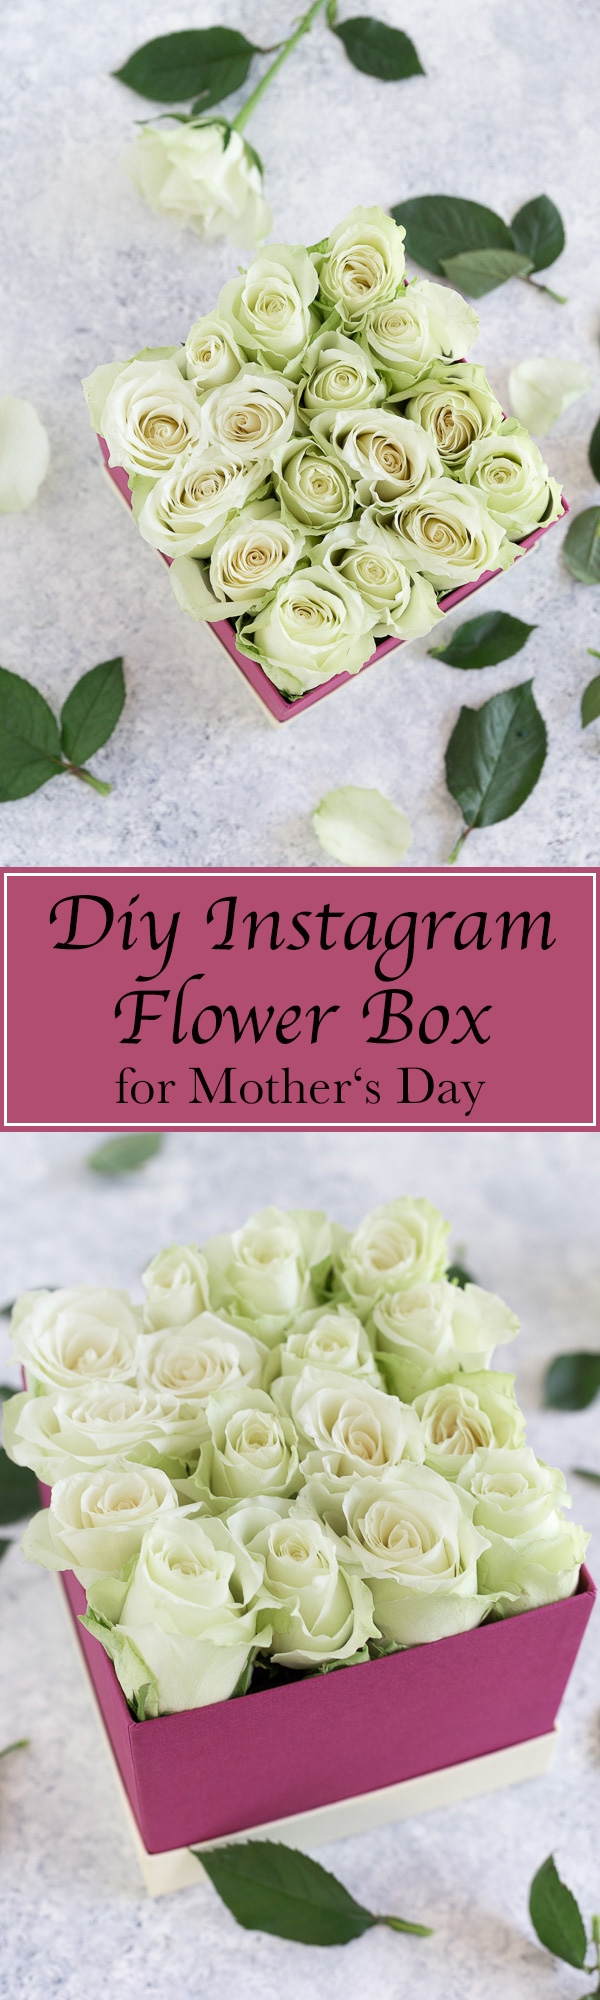 diy flower box, diy Instagram flower box, Instagram flower box, how to make a flower box, diy rose box, rose box, flower diy, flower craft